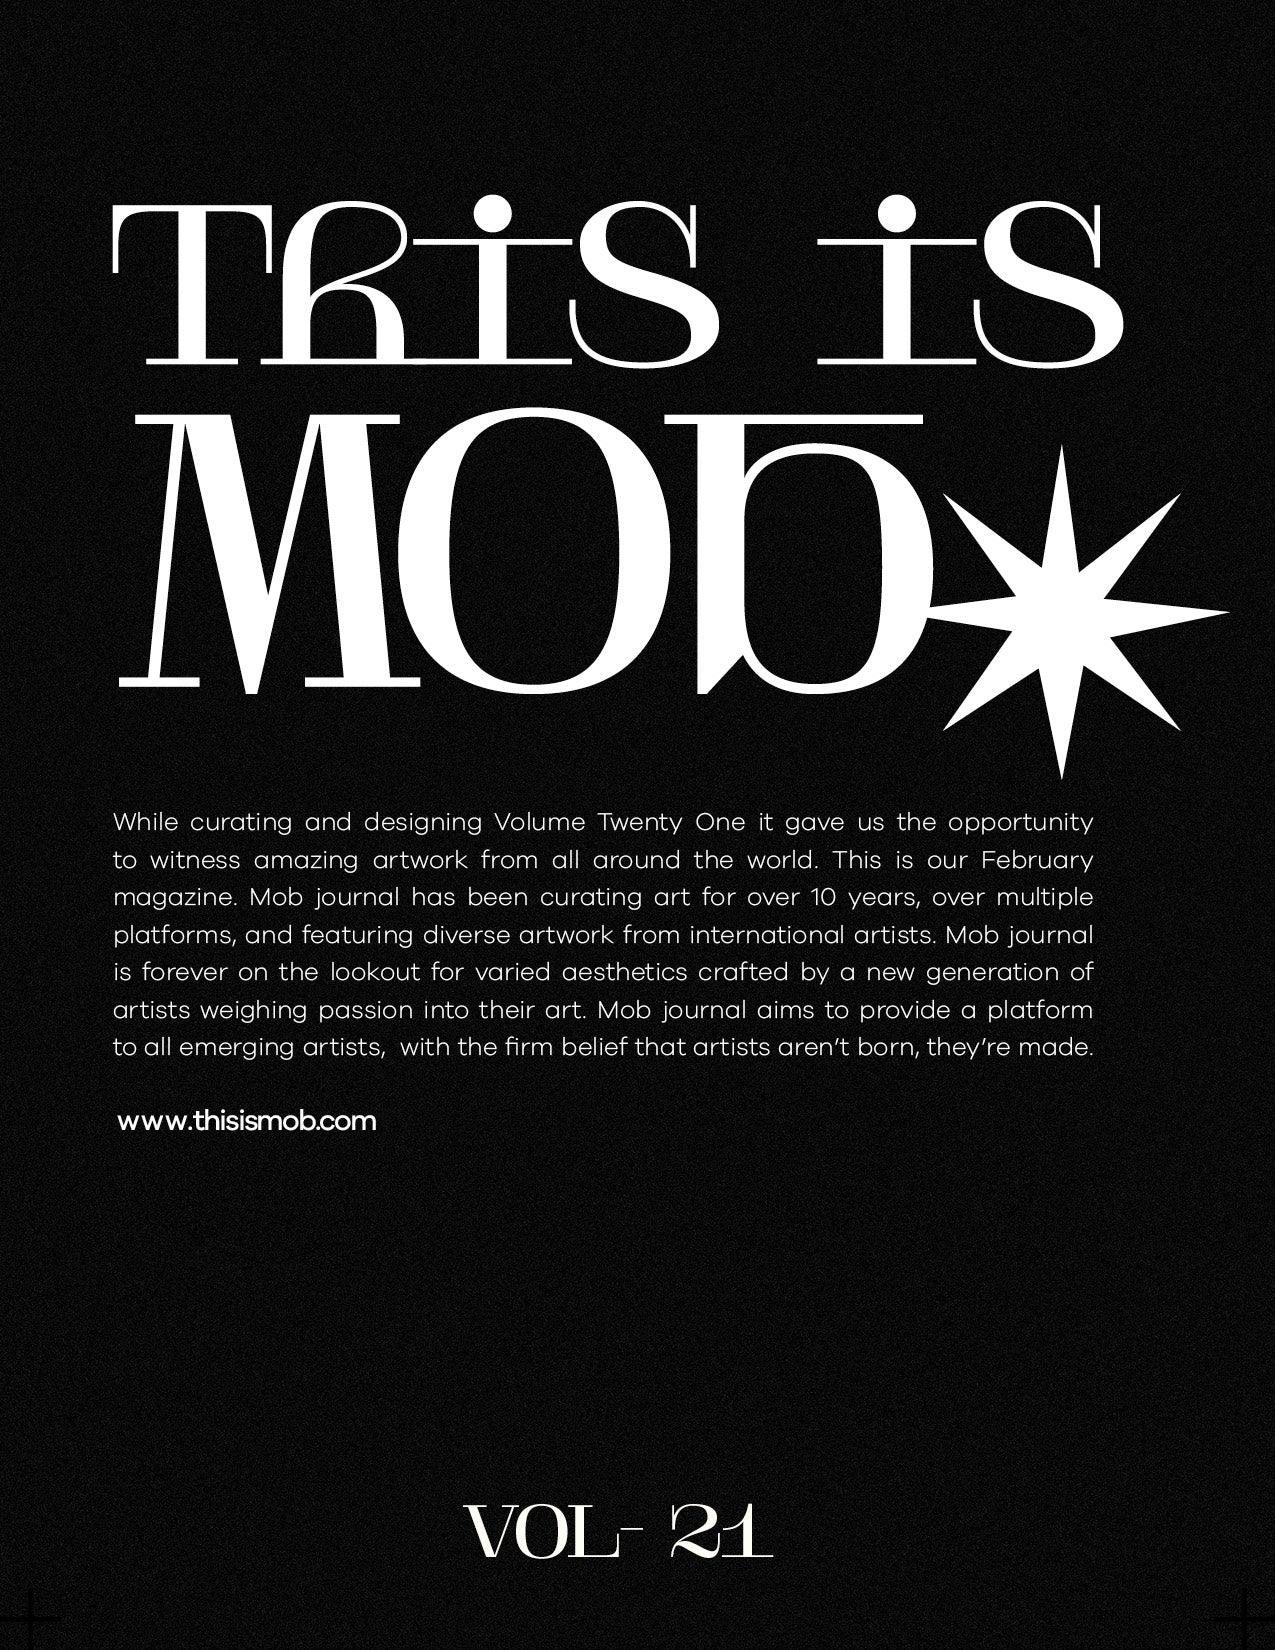 MOB JOURNAL | VOLUME TWENTY ONE | ISSUE #38 - Mob Journal